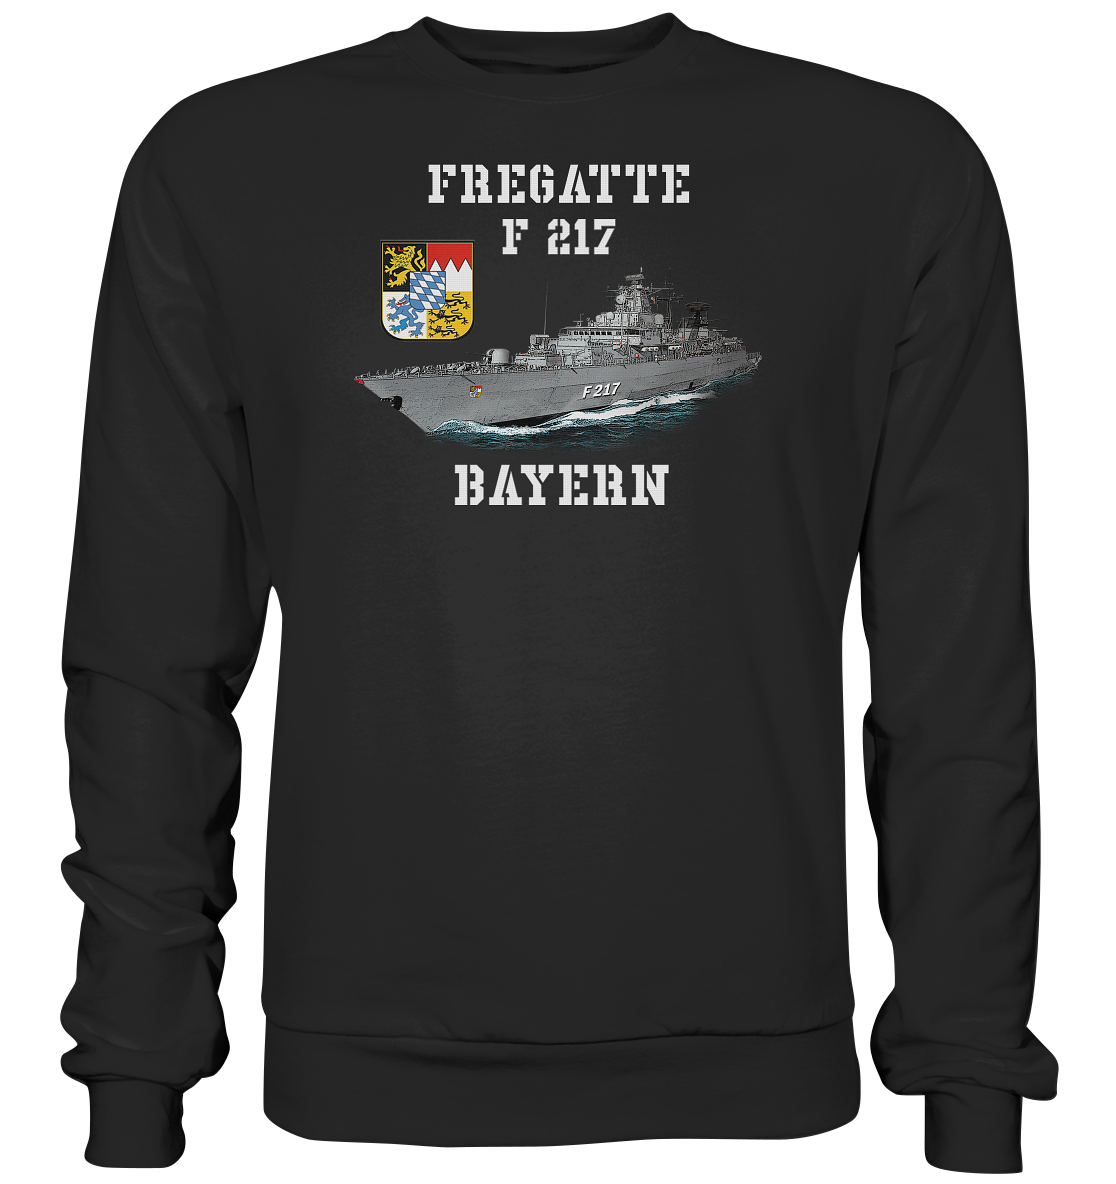 Fregatte F217 BAYERN - Premium Sweatshirt